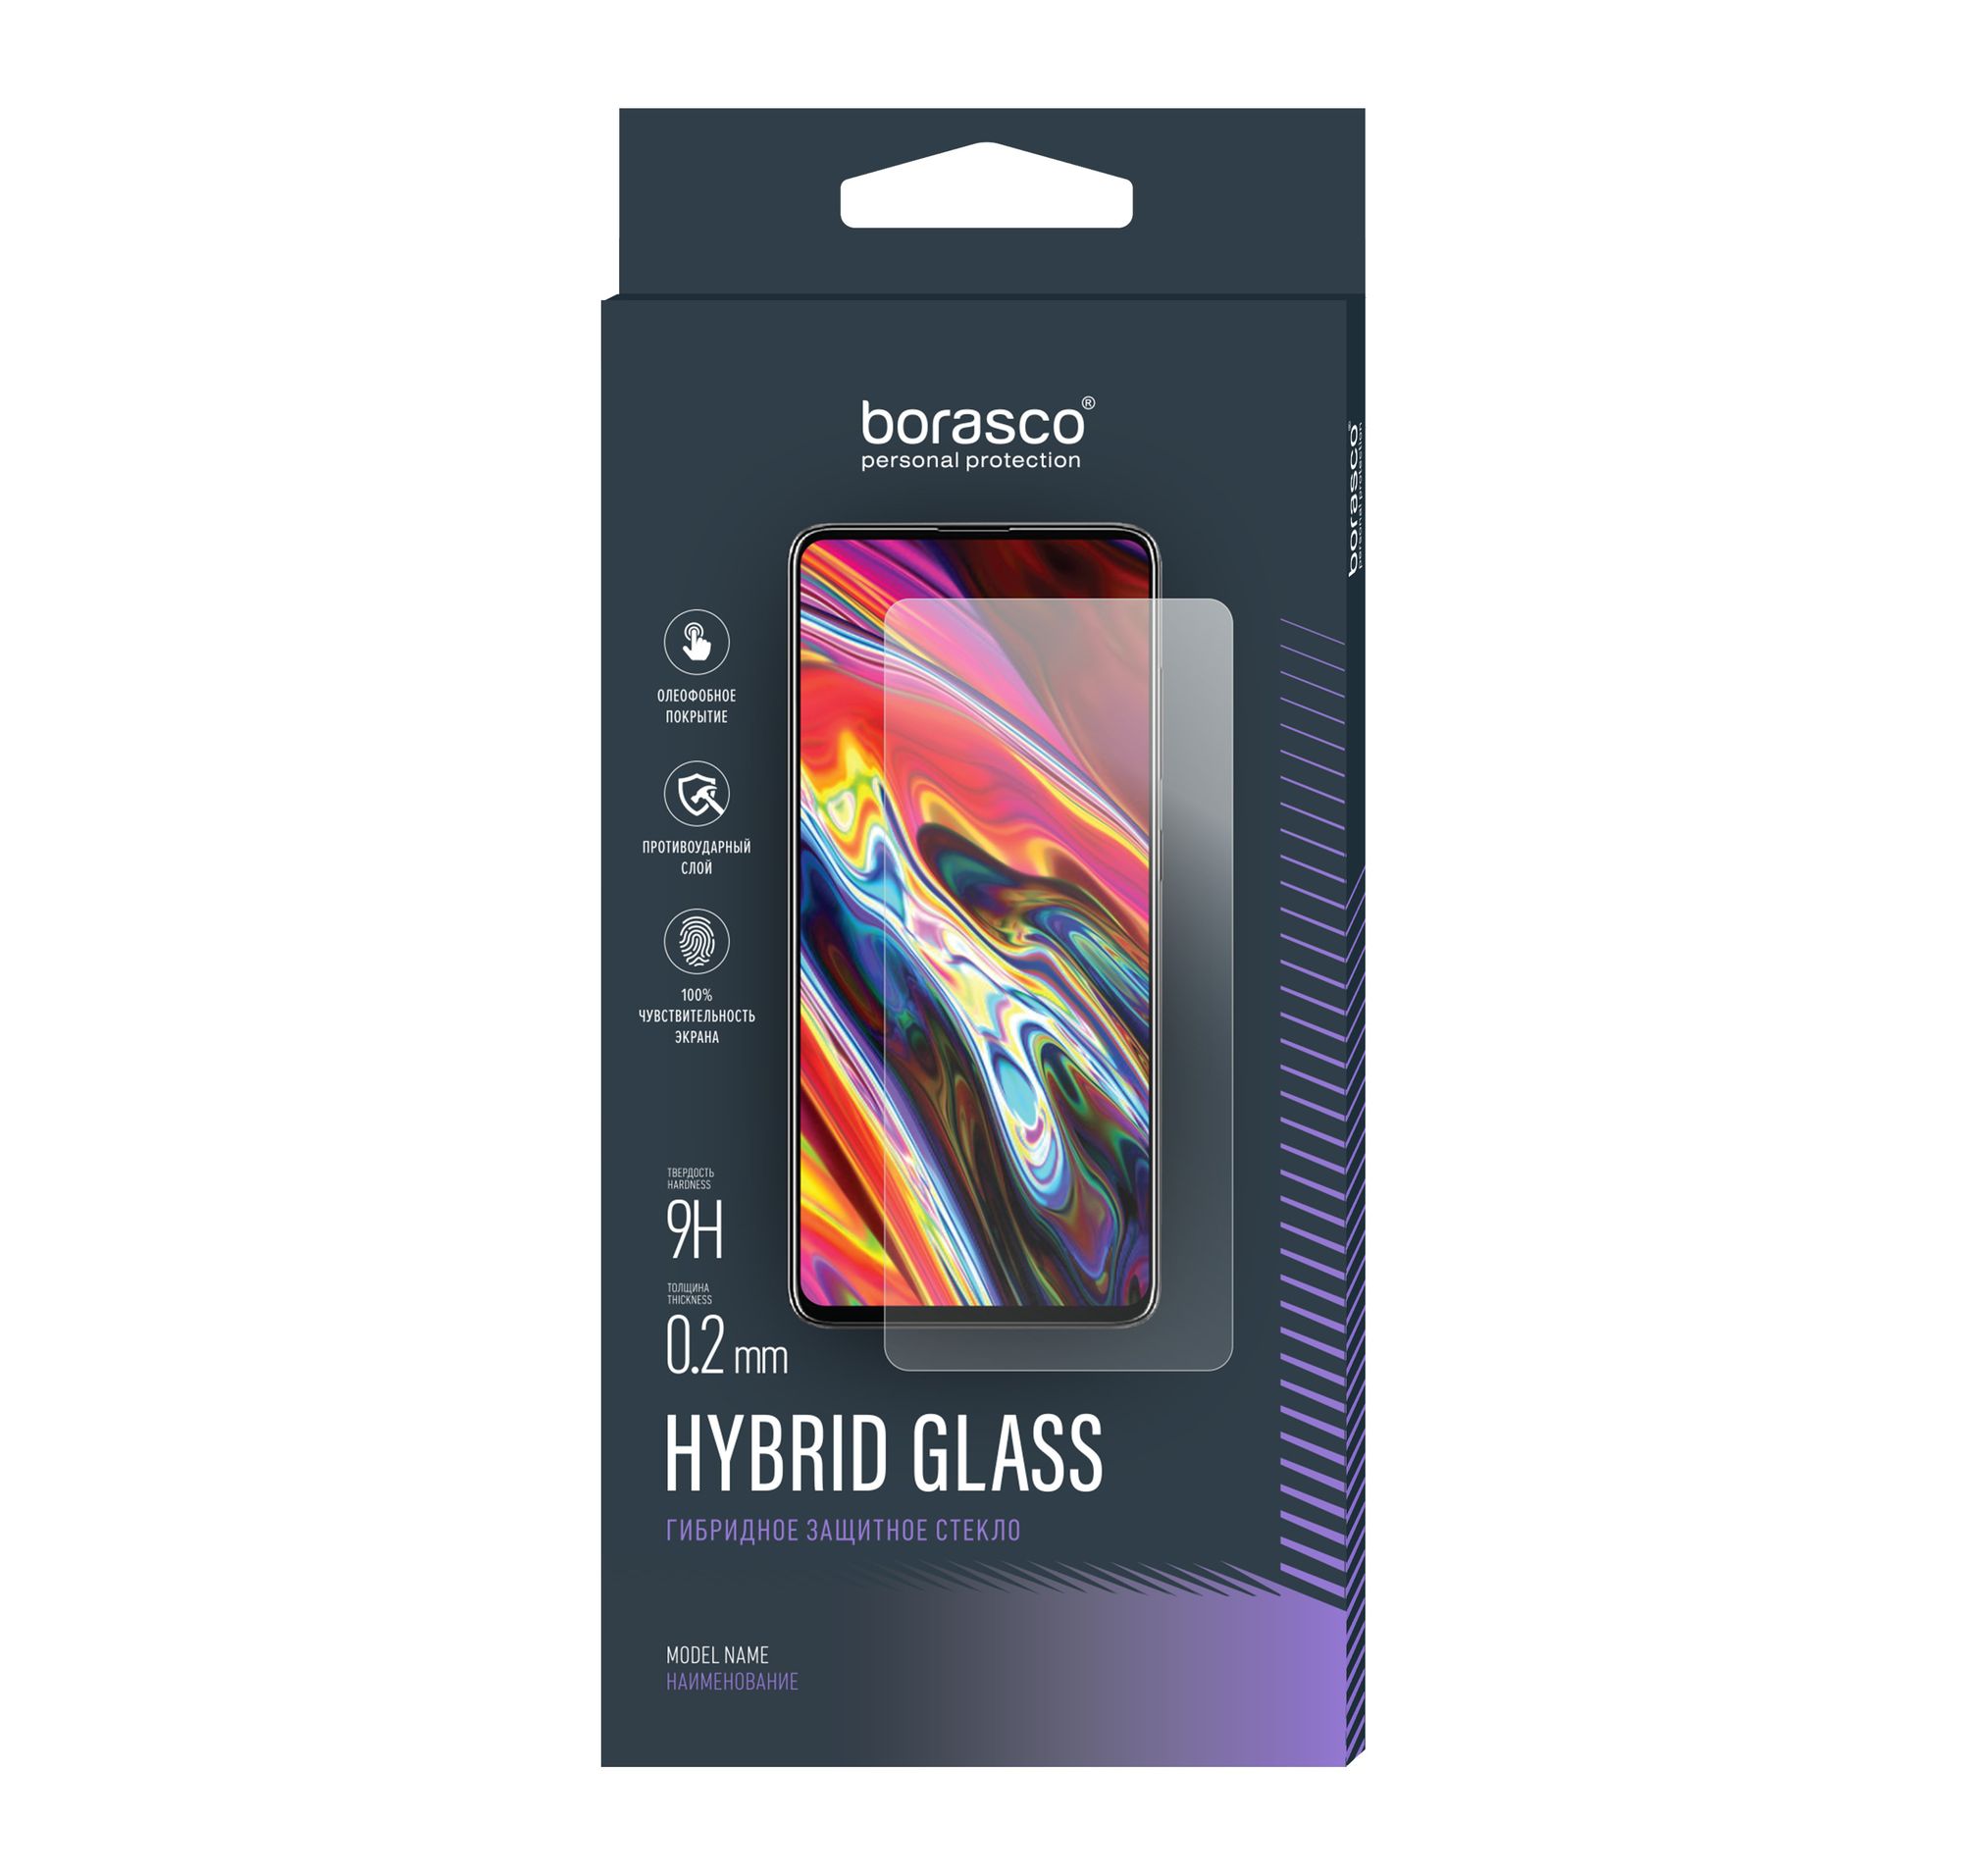 Стекло защитное Hybrid Glass VSP 0,26 мм для Sony Xperia X защитное стекло для sony xperia z3 d6603 2 5d